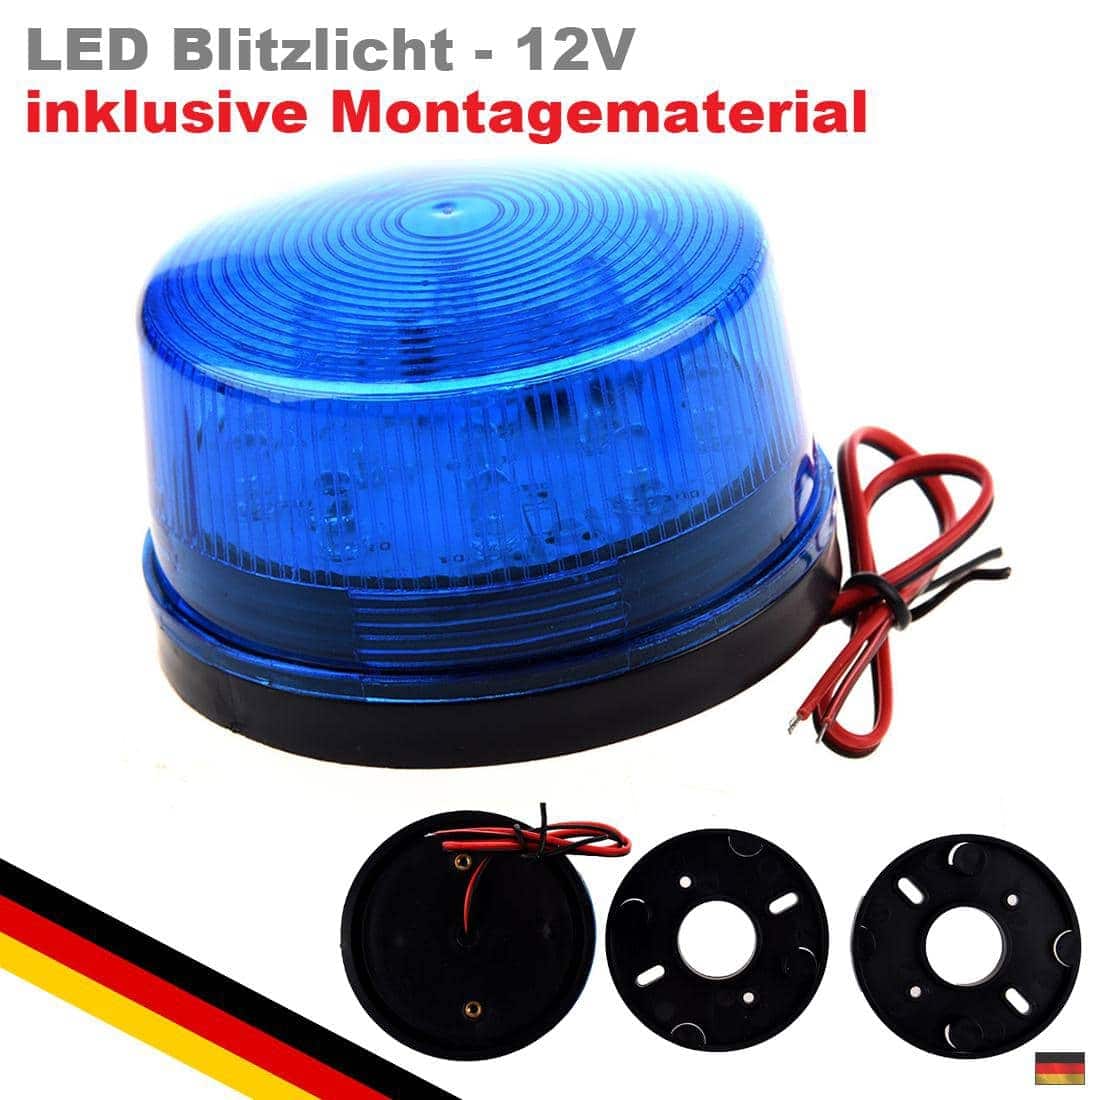 Marke sehr laut LED Alarmanlage <110db/1m 12V Alarmsirene mit Blitzer Blau 